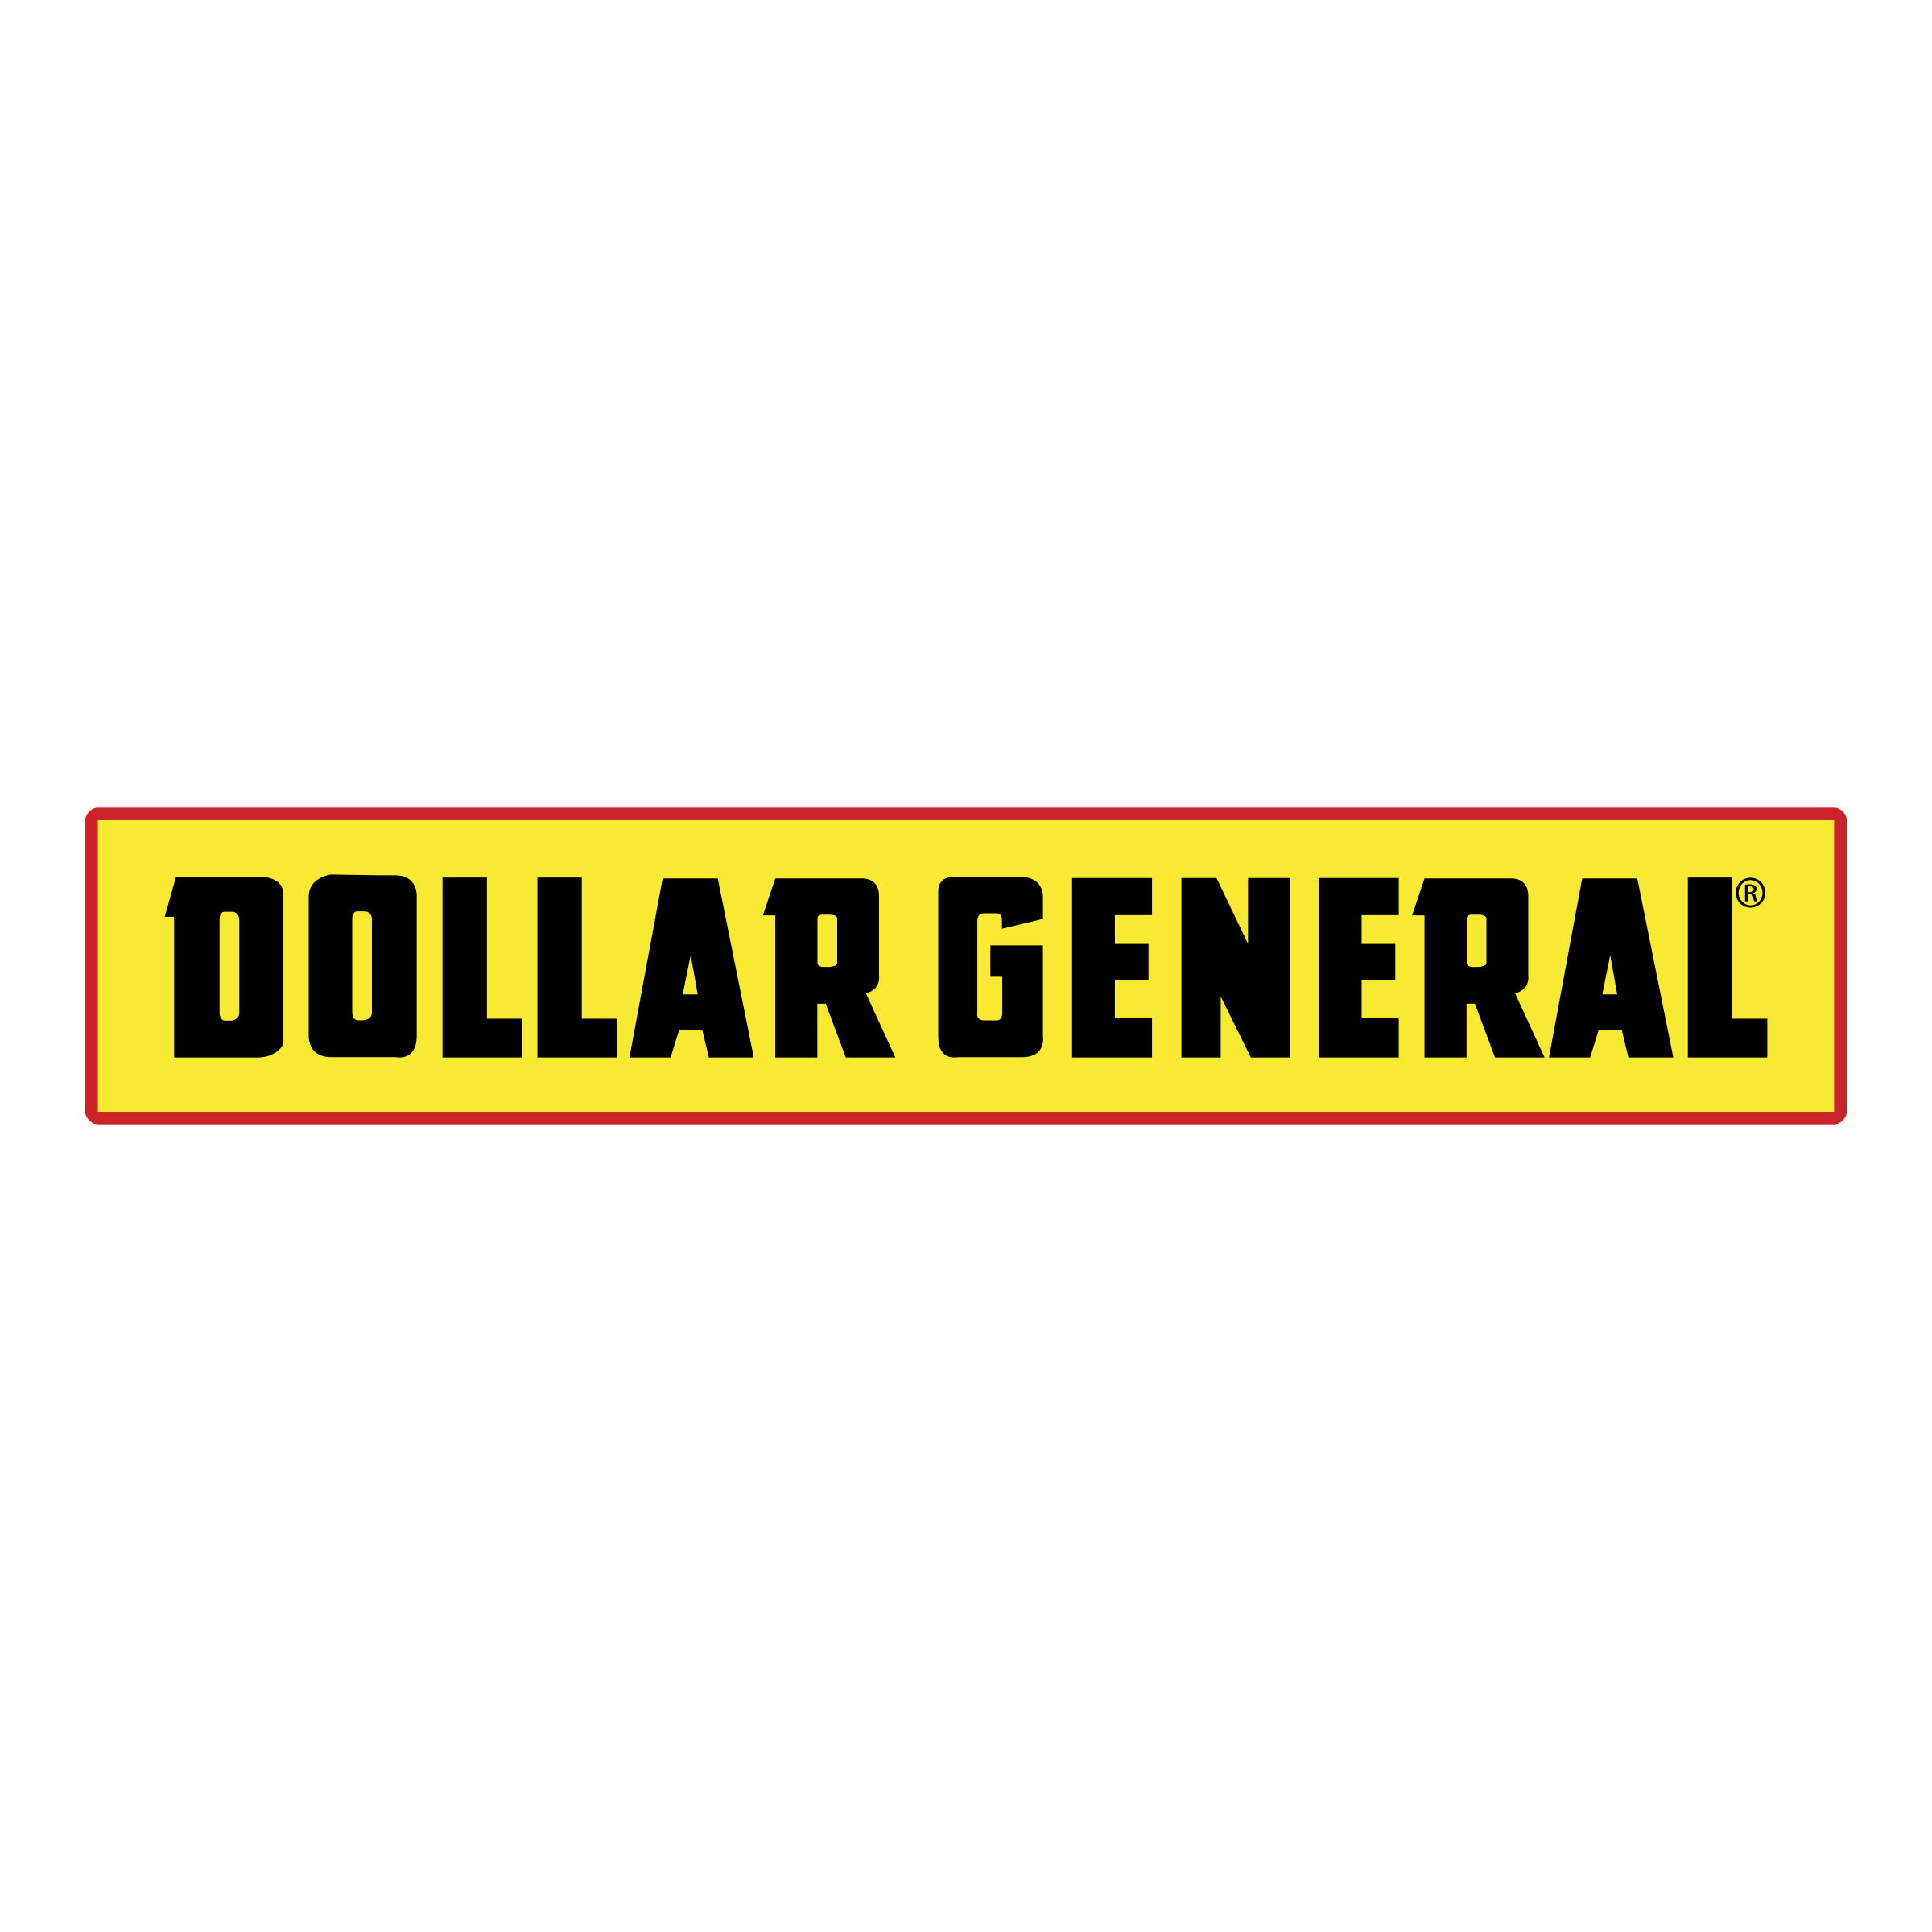 Dollar General Logo - Dollar General Logo PNG Transparent & SVG Vector - Freebie Supply